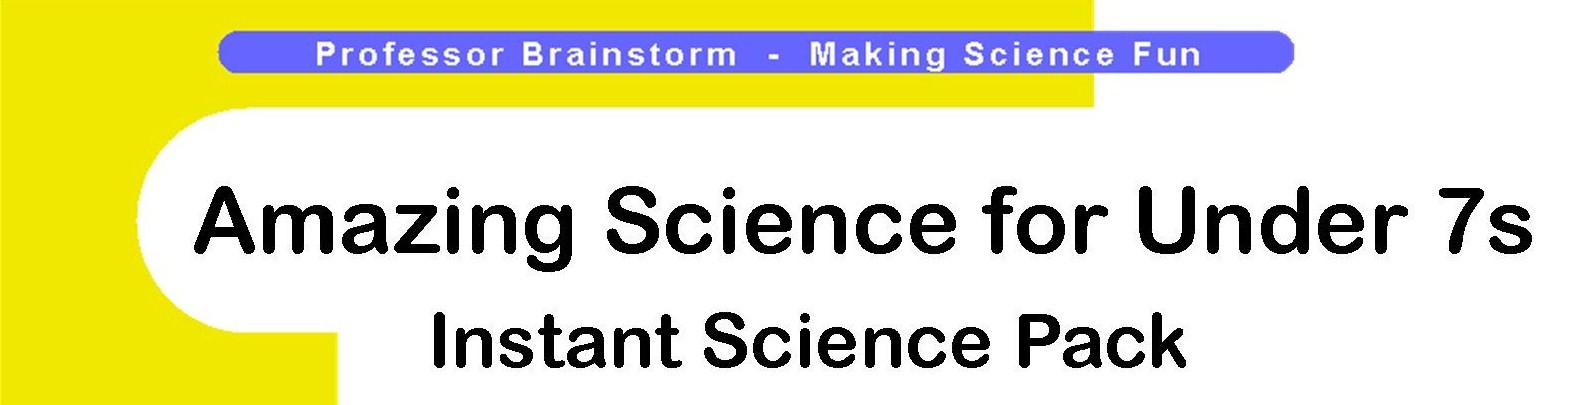 Professor Brainstorm's Science Shop - Amazing Science for Under 7s